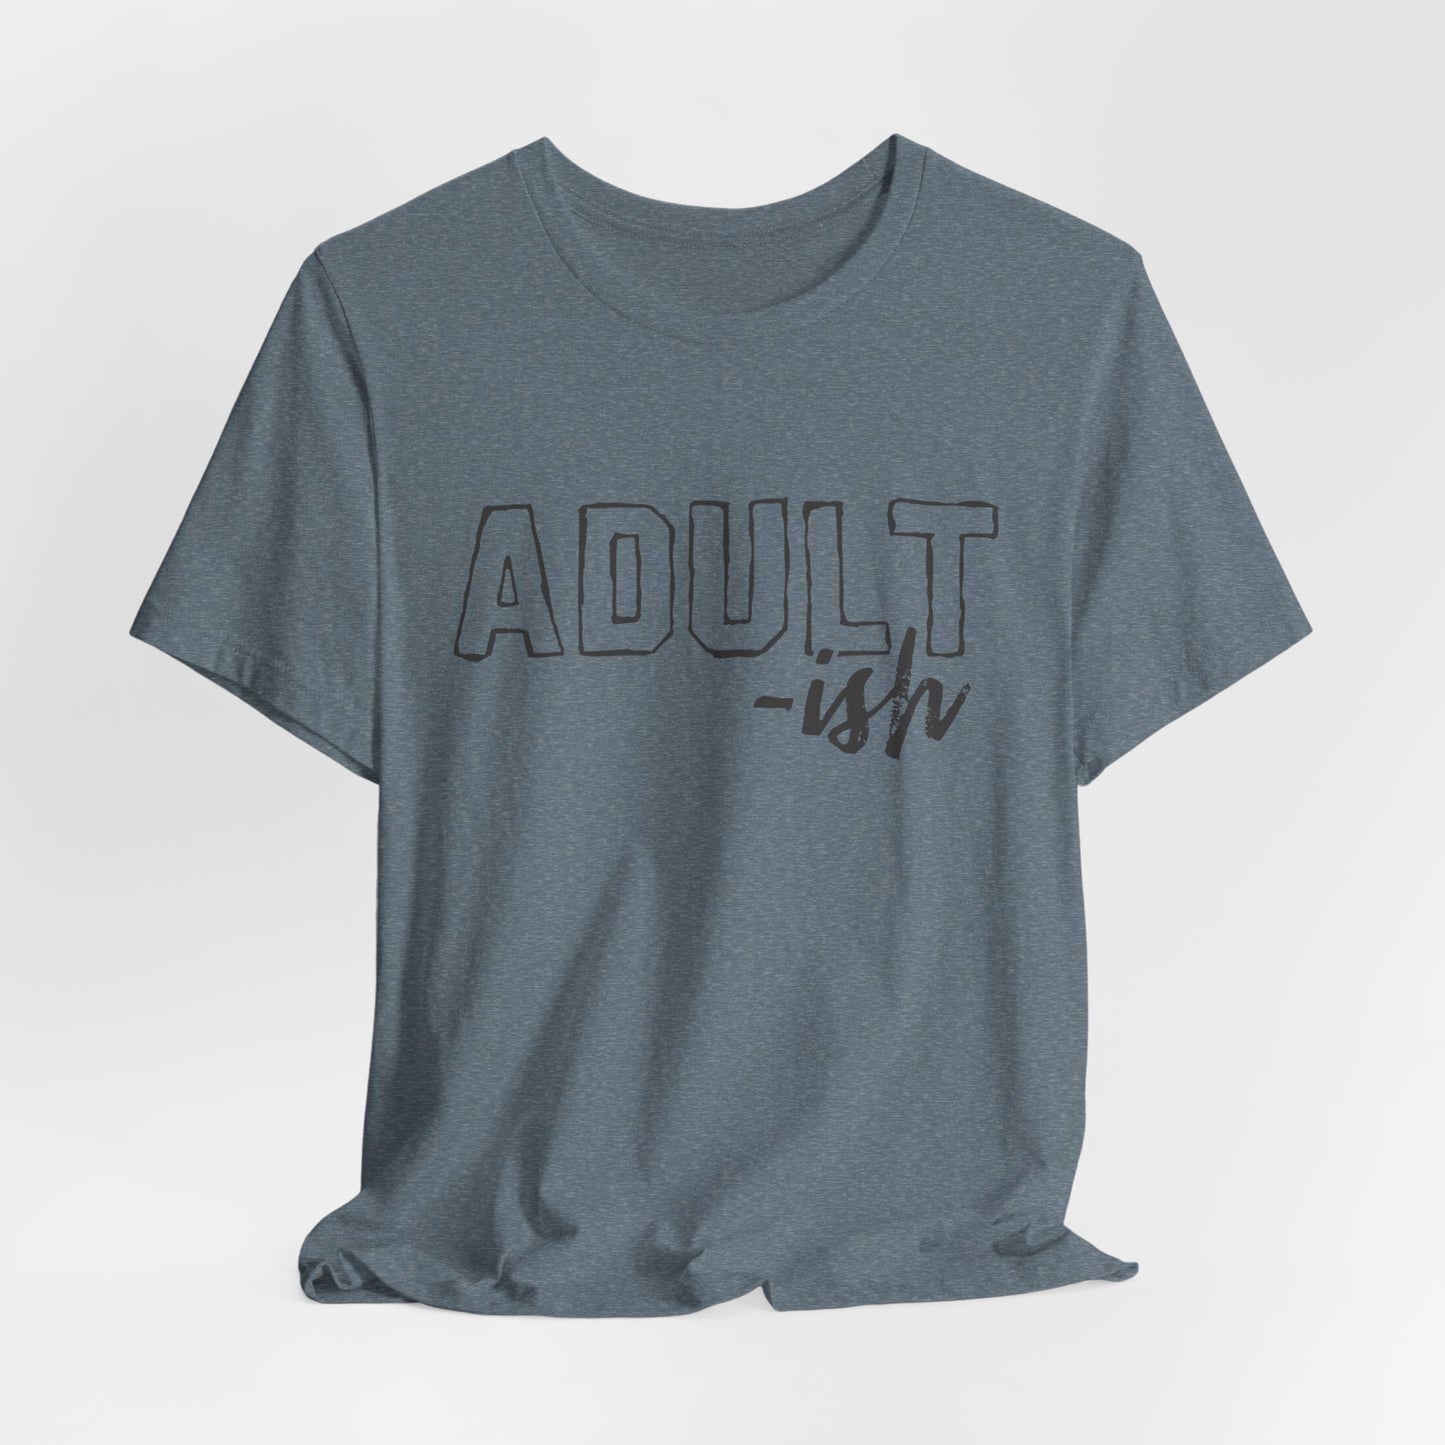 Adult-ISH Funny Short Sleeve Adult Unisex Tshirt